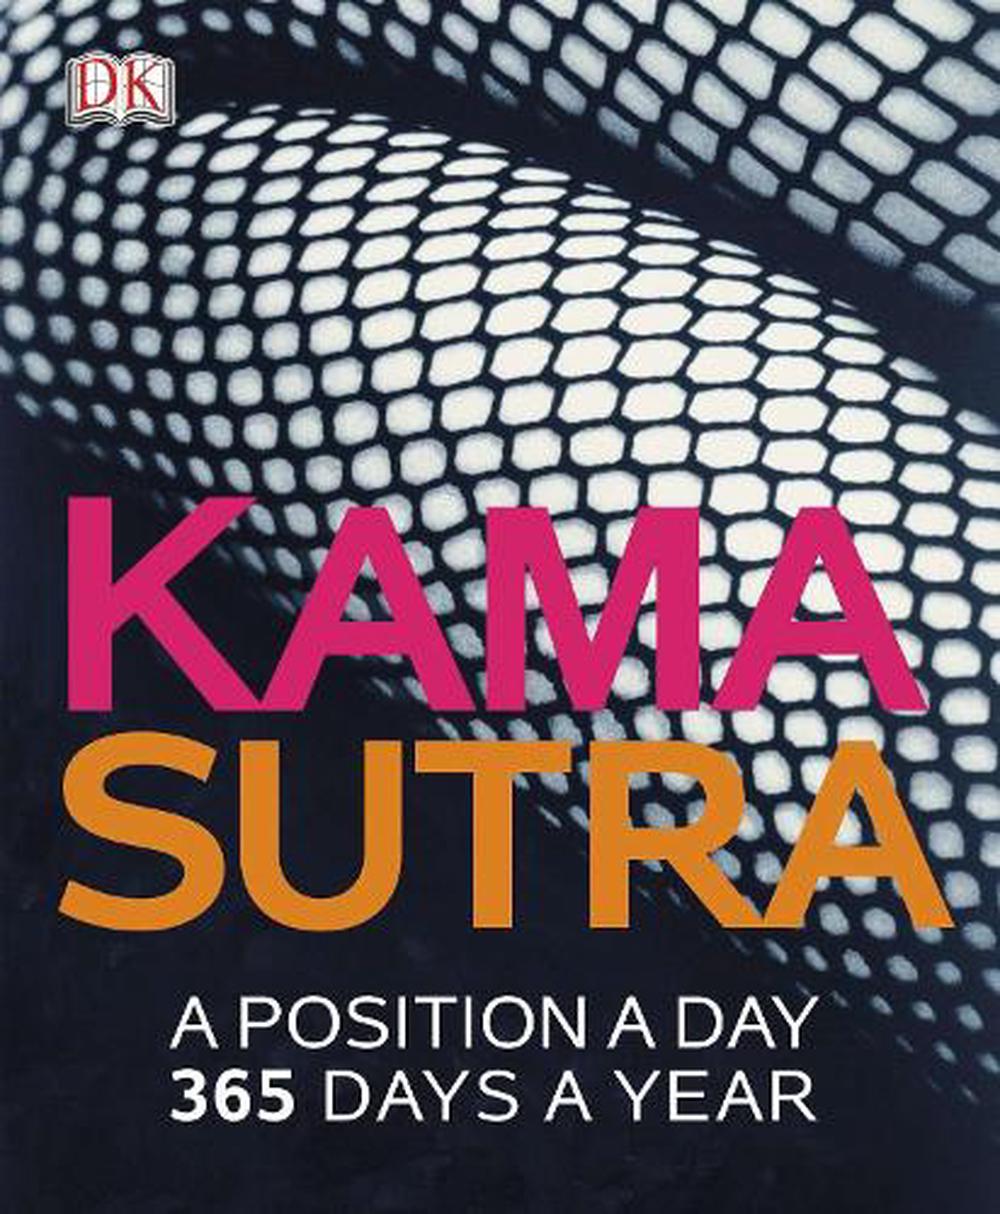 weirdest karma sutra positions